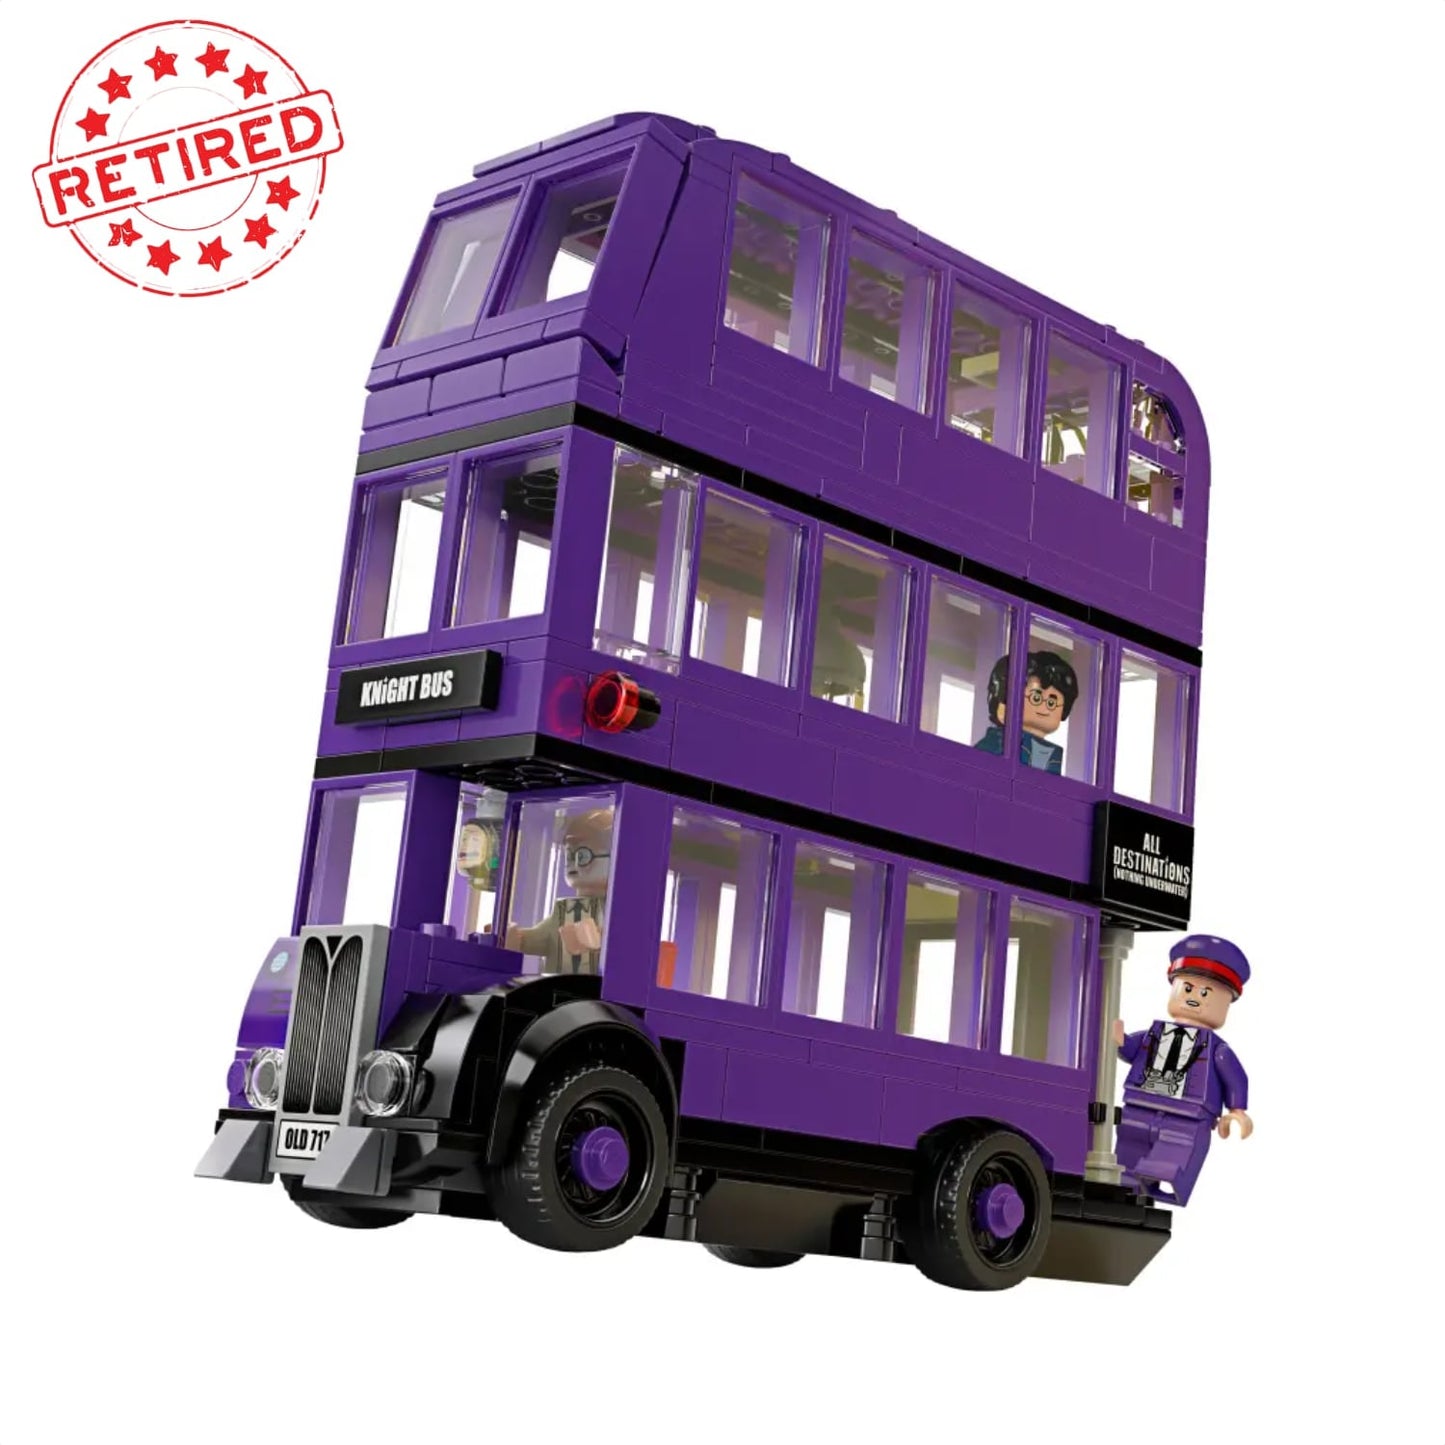 Lego 75957 Harry Potter The Knight Bus